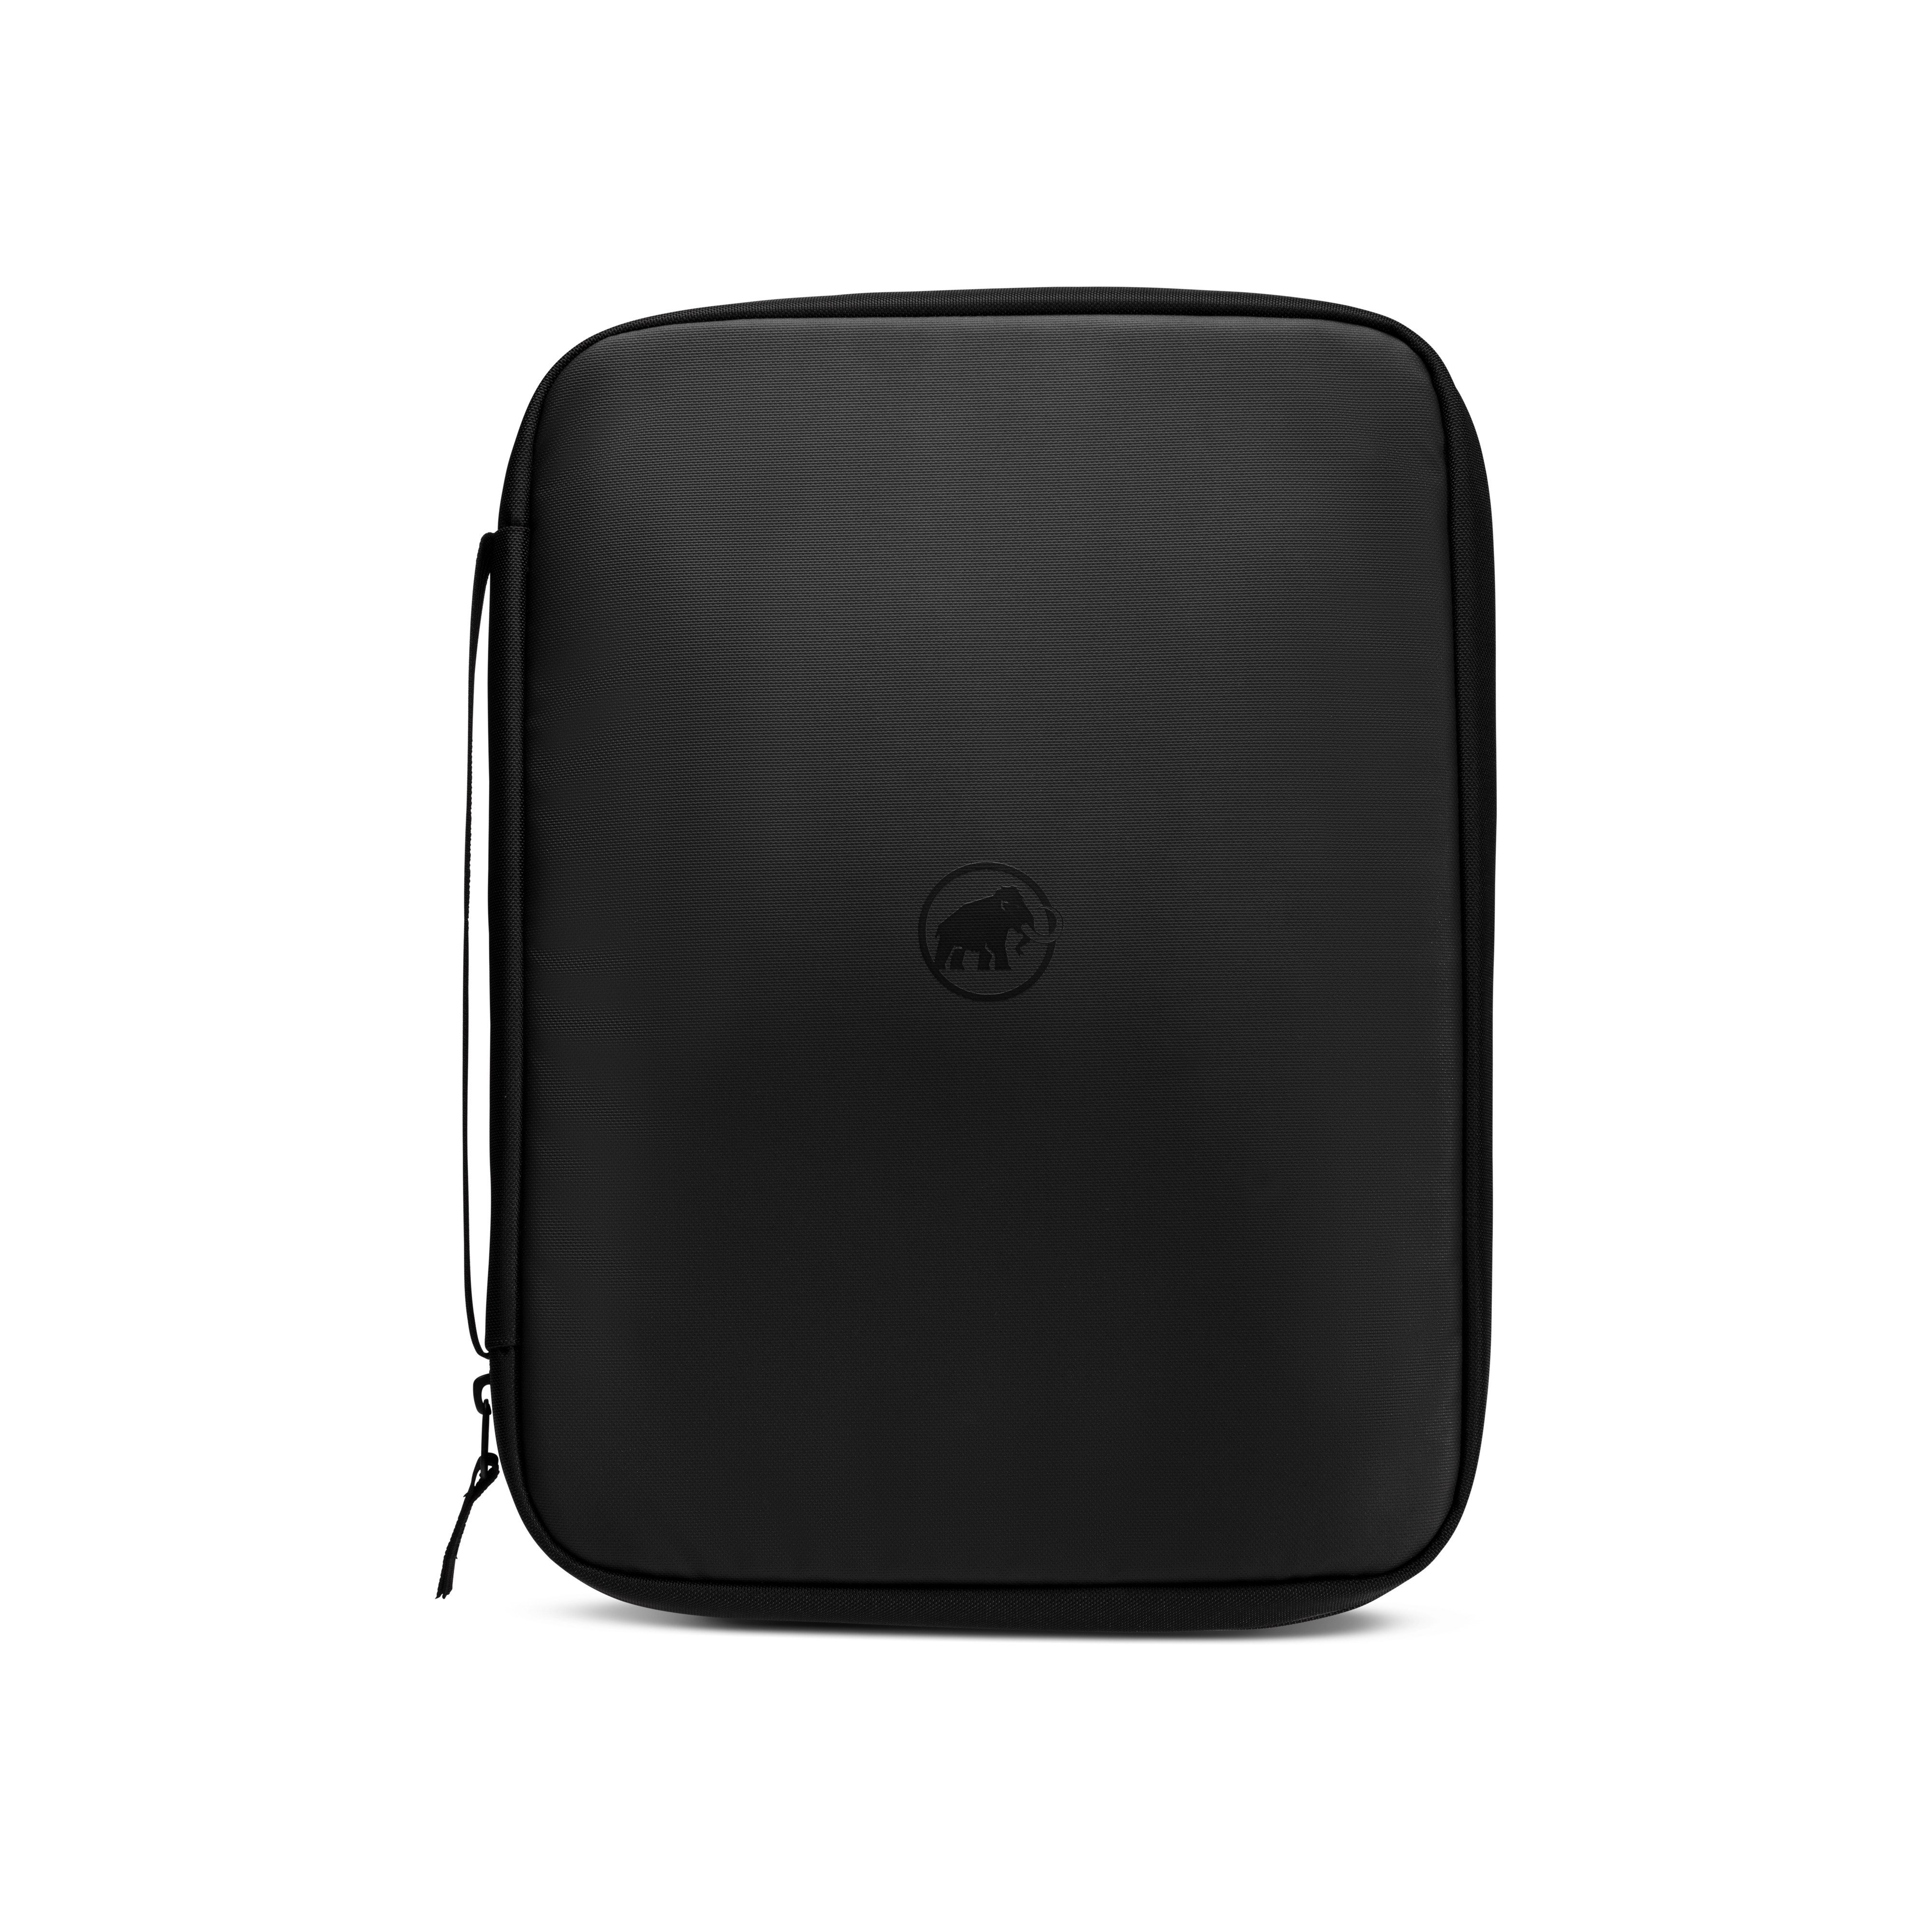 Seon Laptop Case - black, one size product image